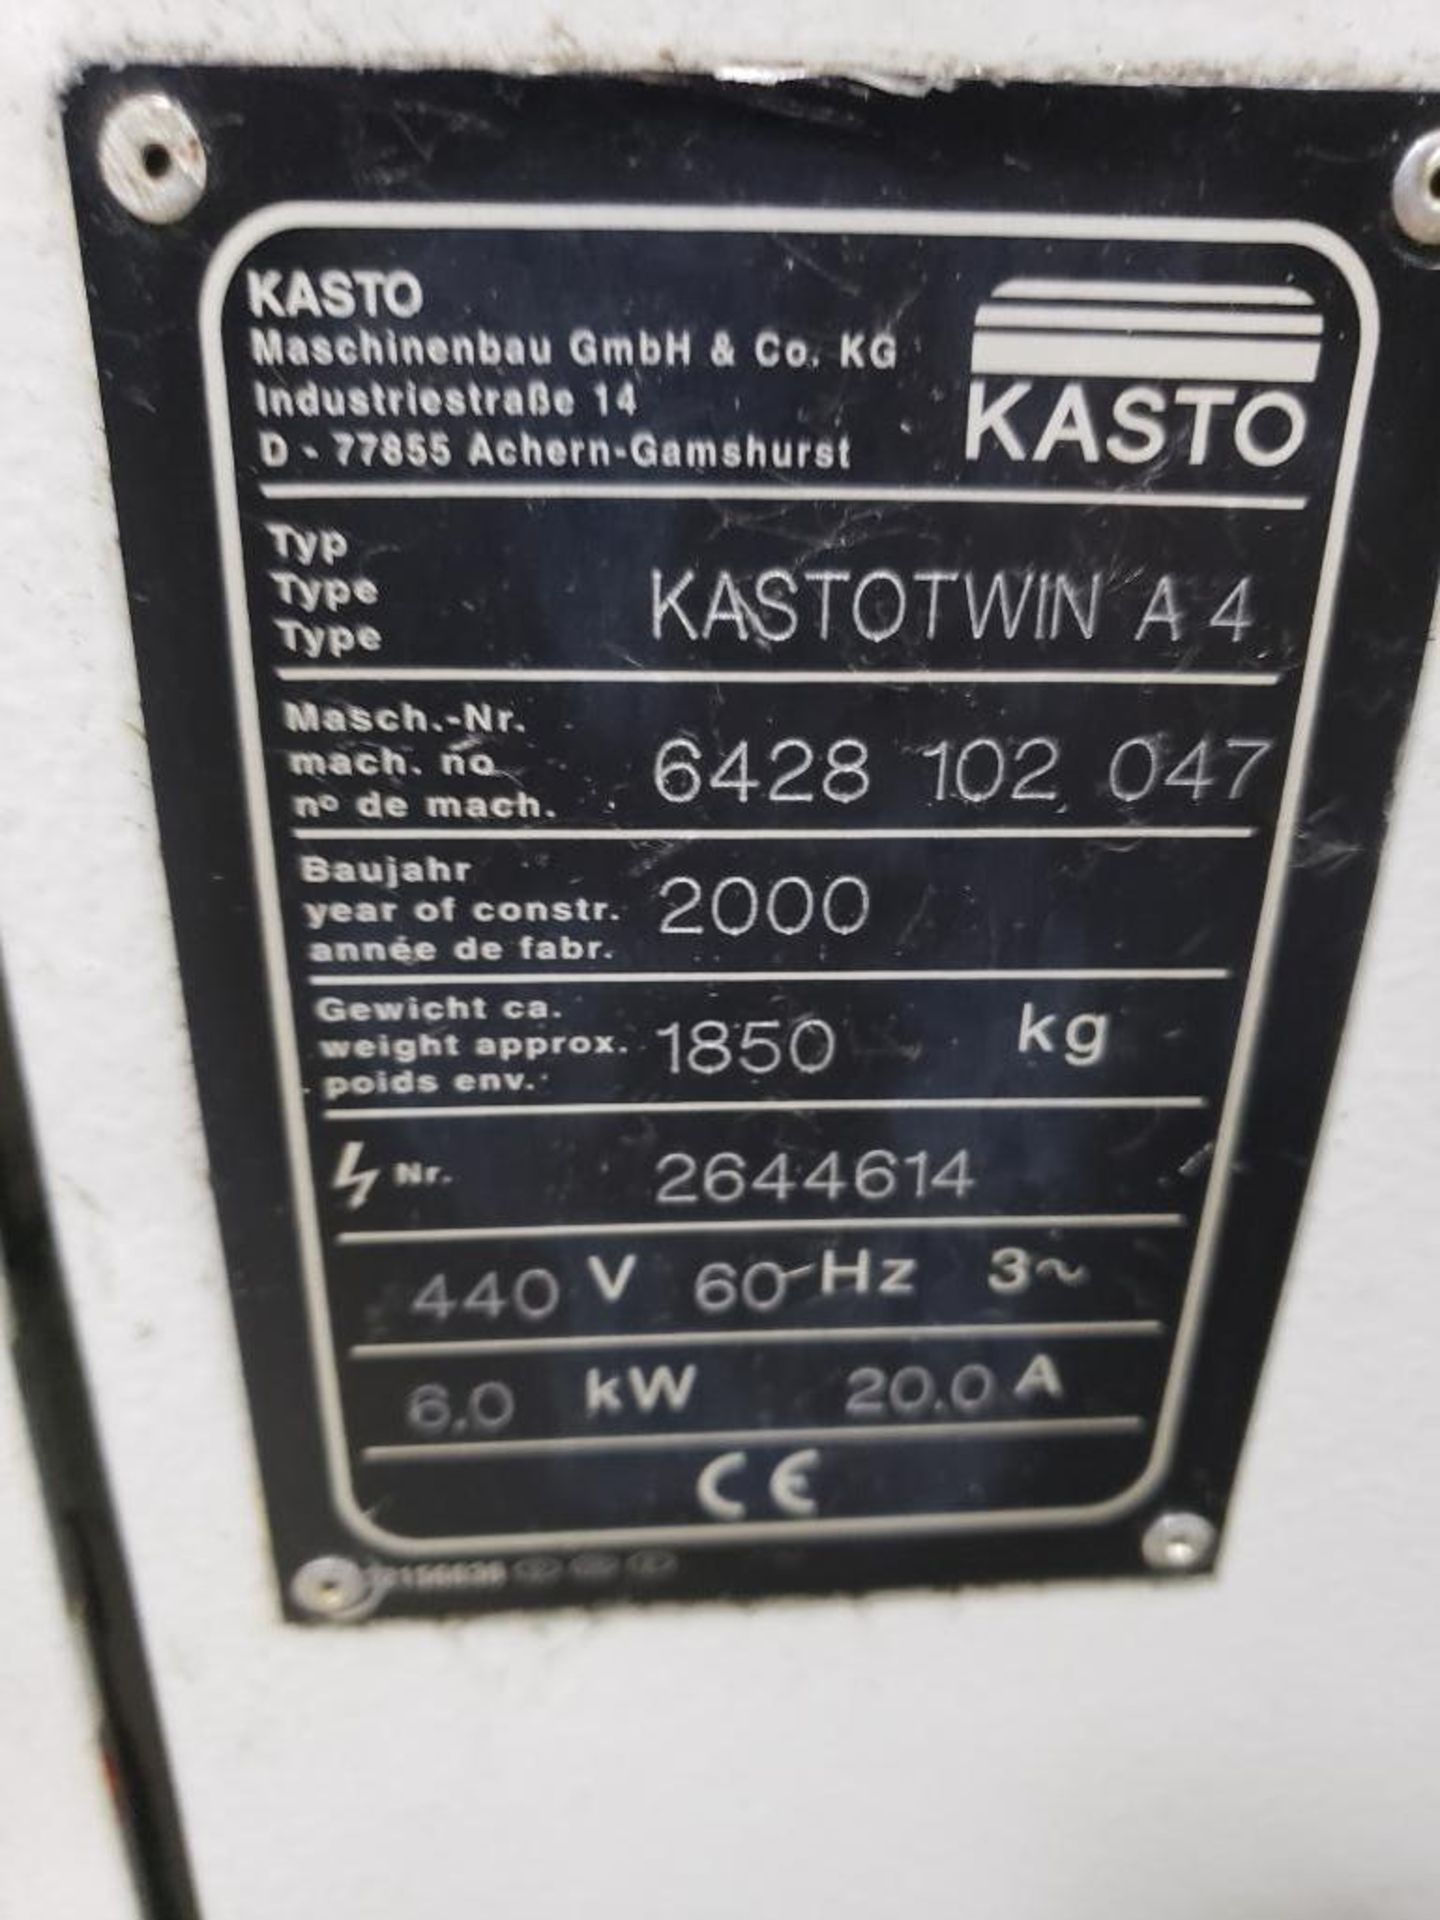 Kasto horizontal CNC band saw Model Kastotwin A4, 3 phase 440v, Mfg year 2000. Serial # 6428102047. - Image 18 of 32